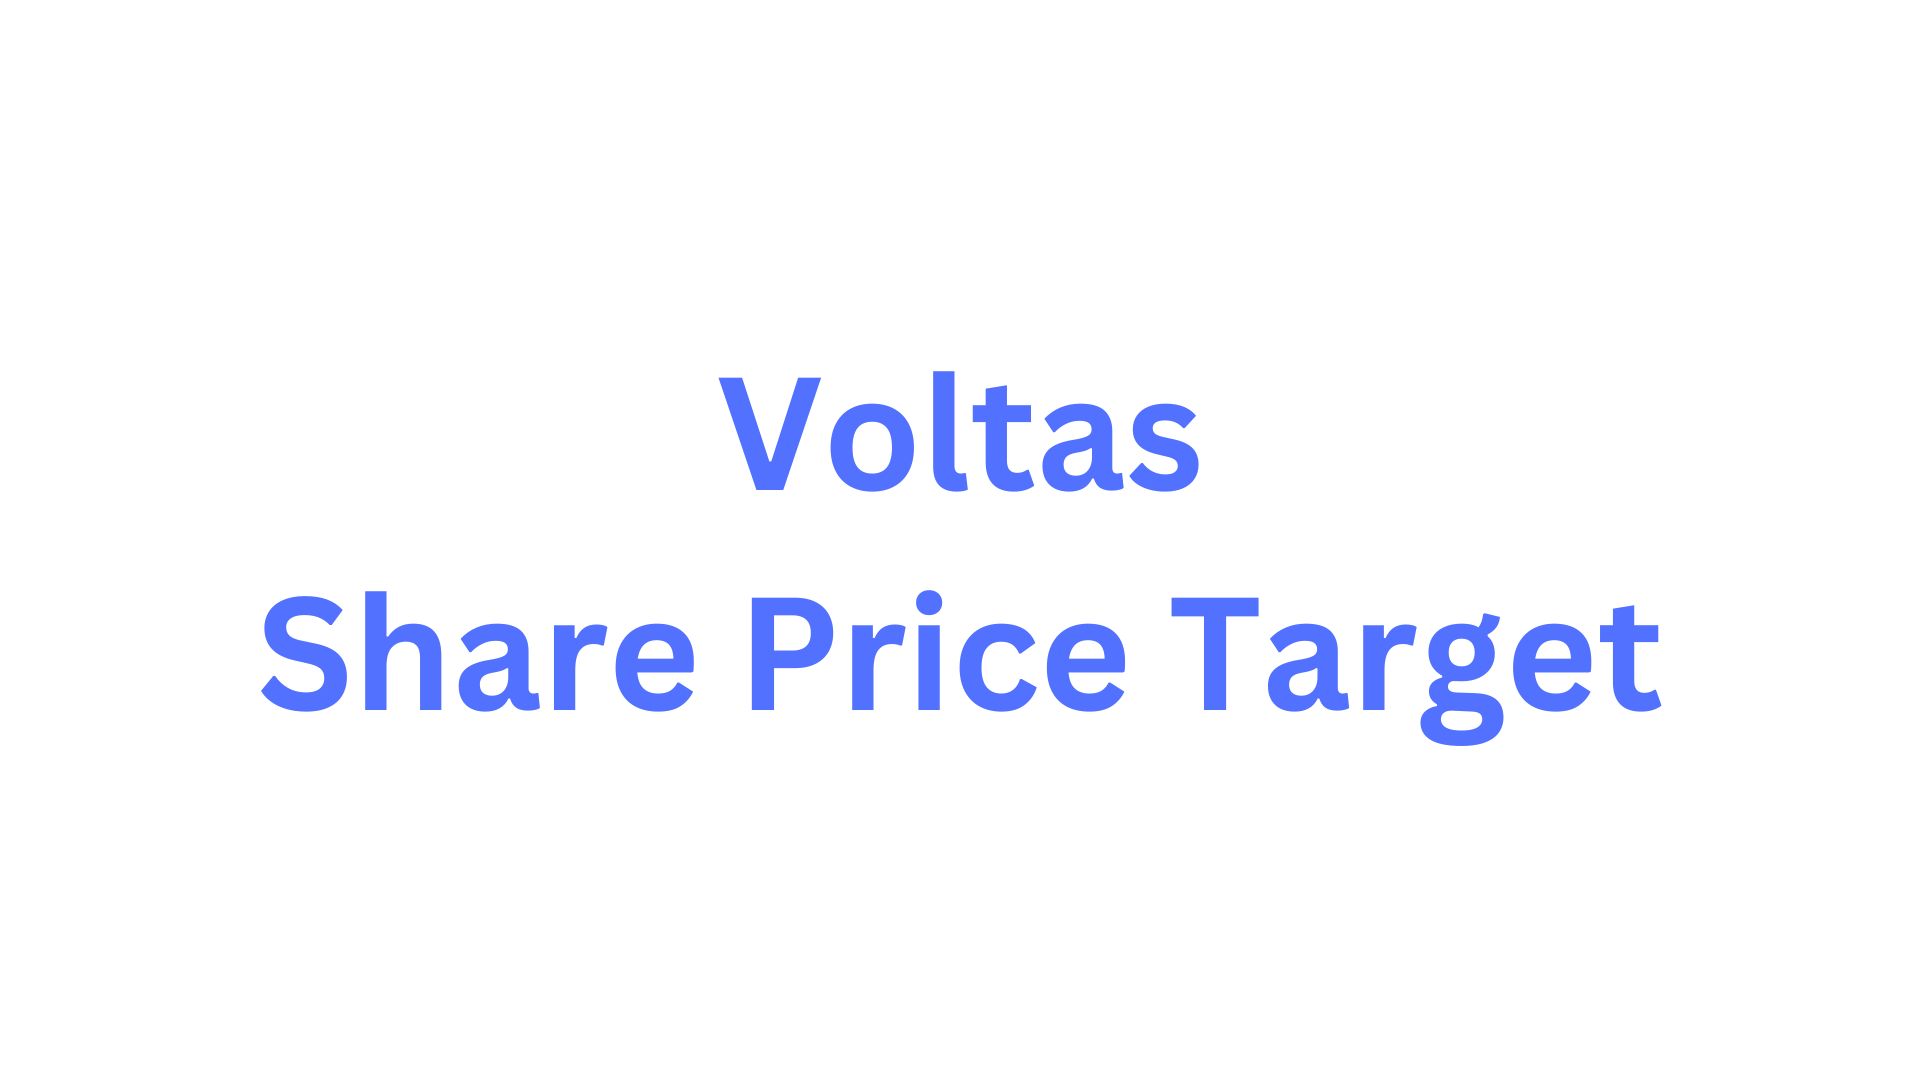 Voltas Share Price Target